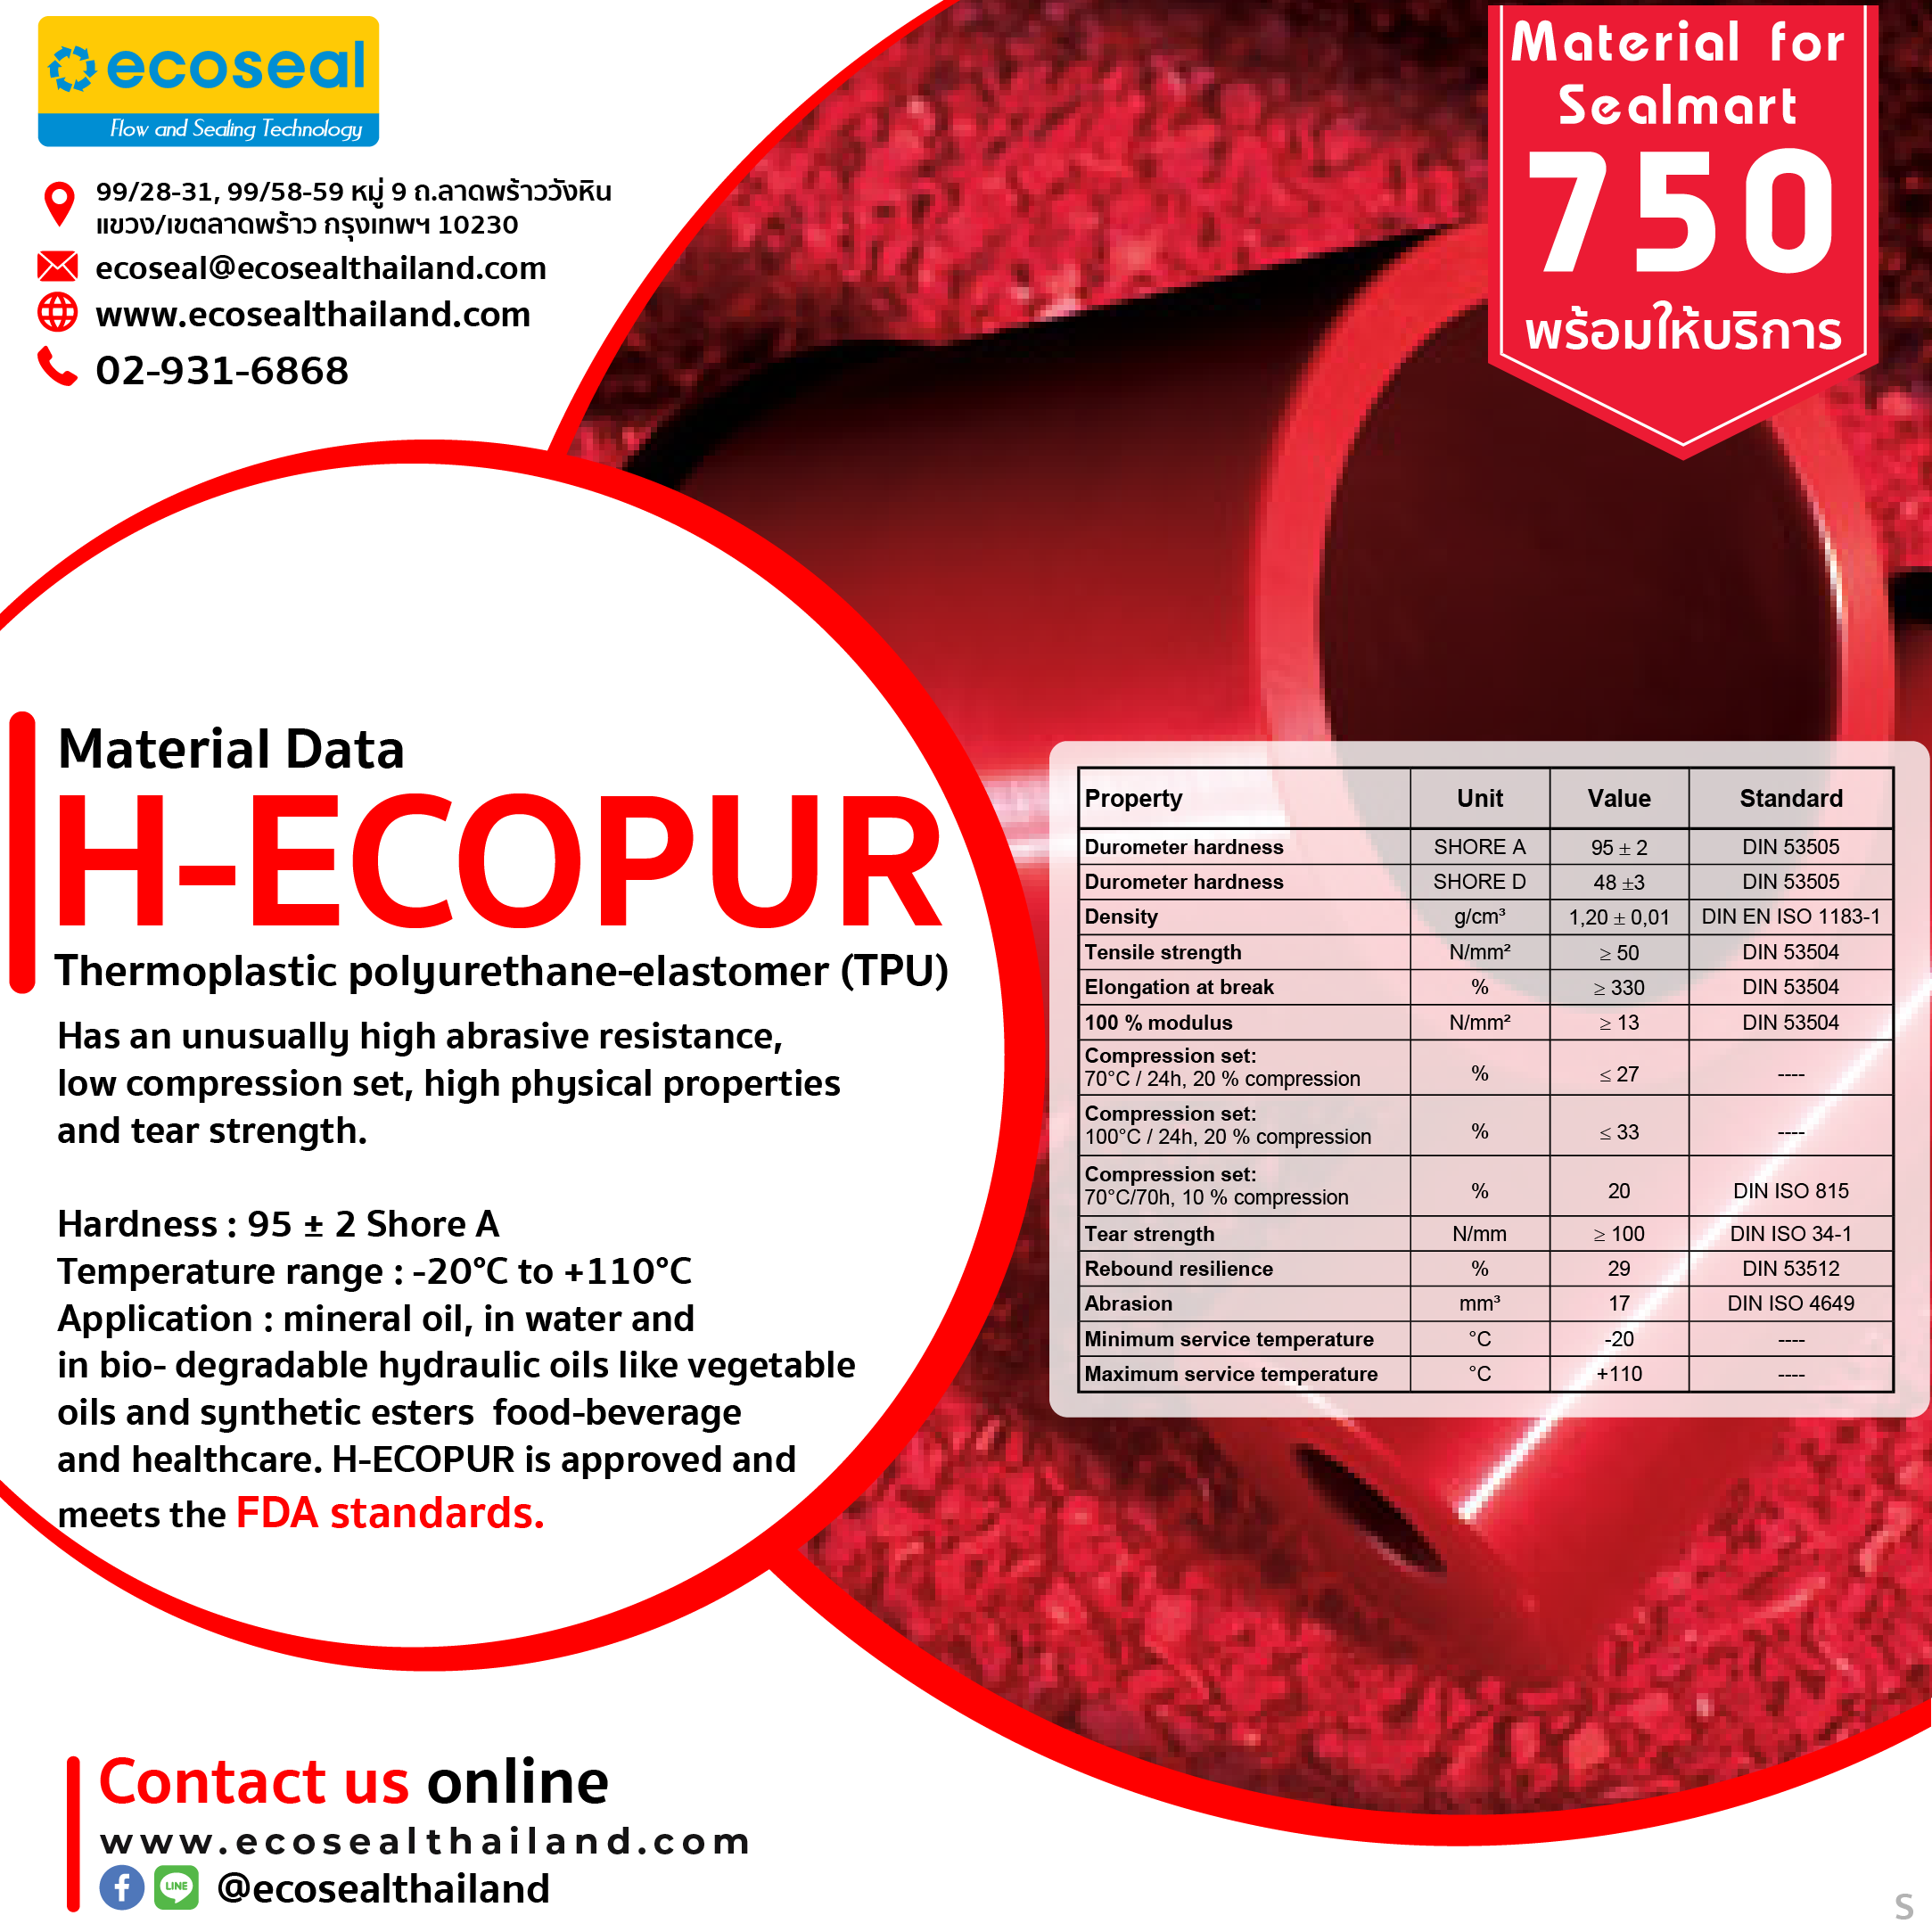 H-Ecopur Material